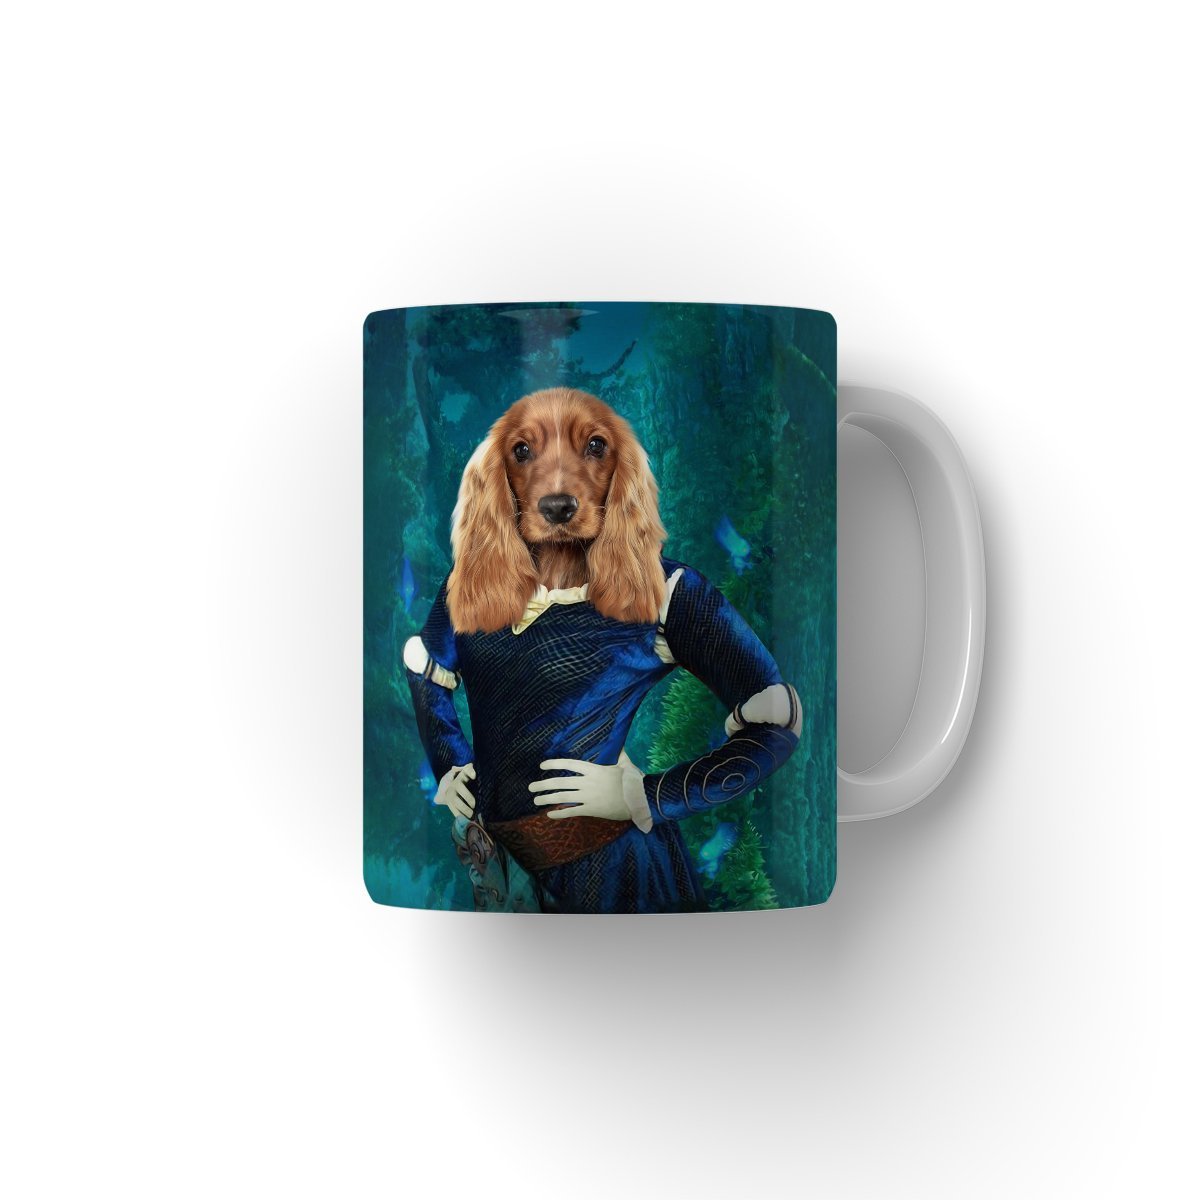 Merida (Brave Inspired): Custom Pet Mug - Paw & Glory - #pet portraits# - #dog portraits# - #pet portraits uk#pawandglory, pet art Mug,custom printing mugs, design a coffee mug, photo printed mug, custom coffee mug, make a mug